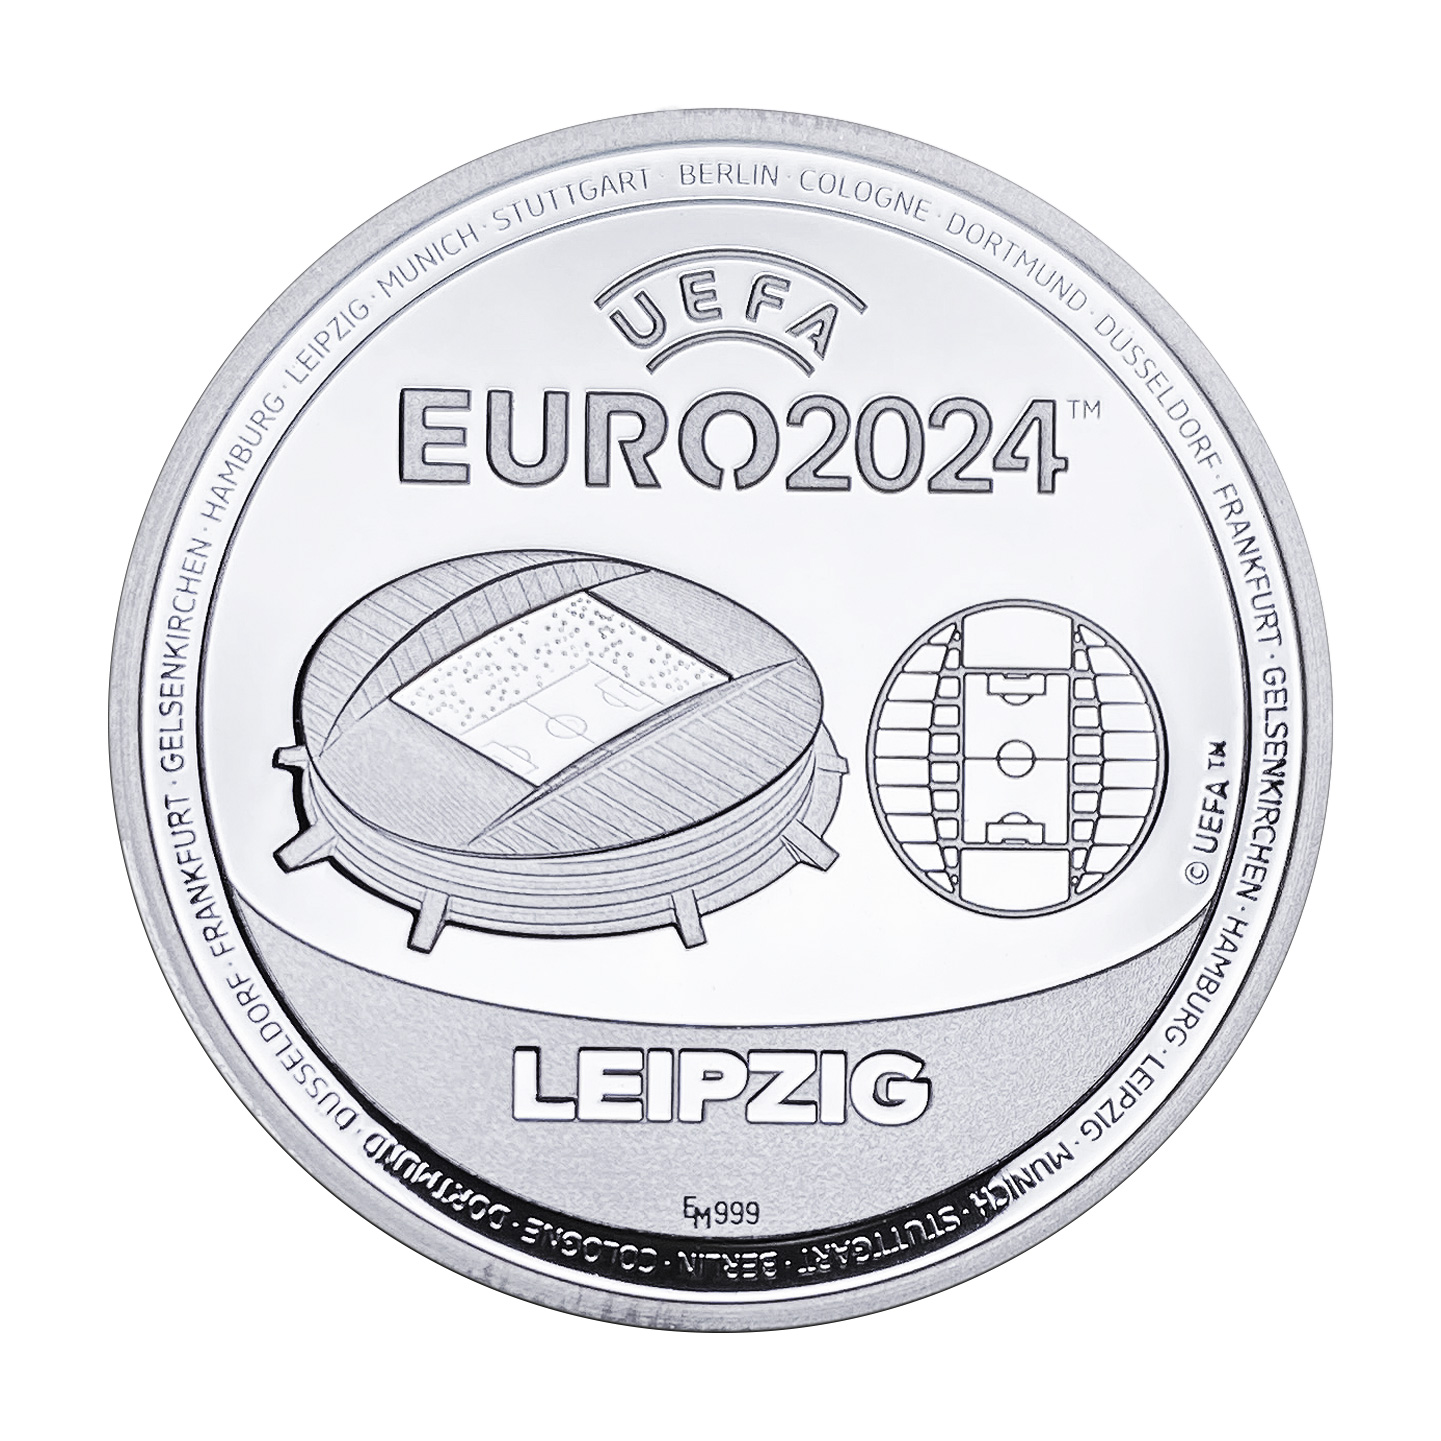 UEFA EURO 2024 Leipzig - silber